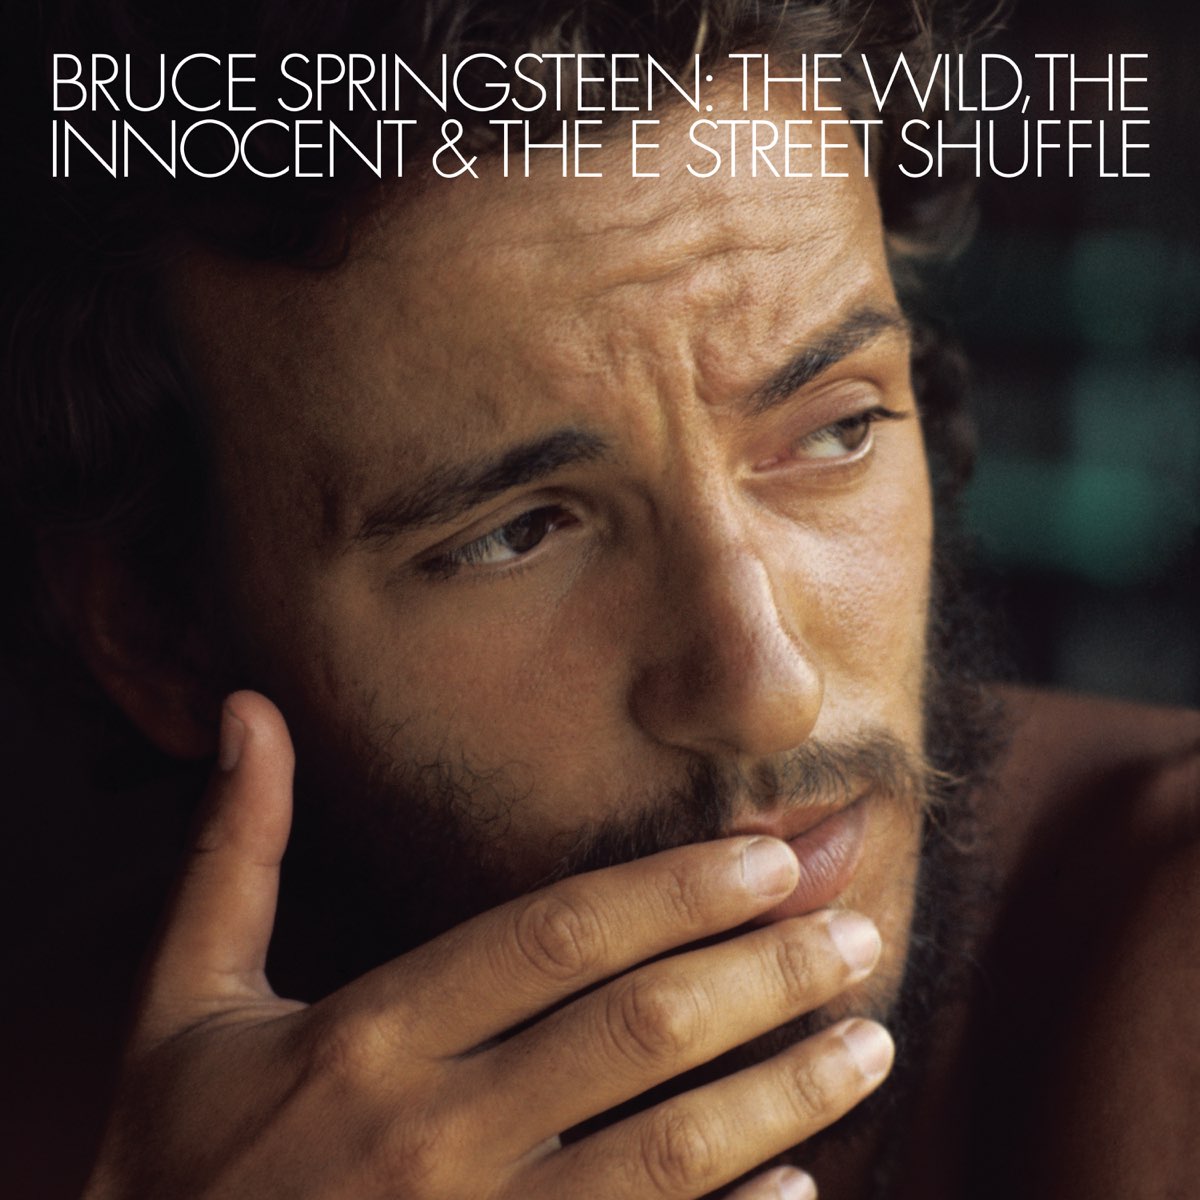 Springsteen, Bruce: The Wild, The Innocent & The E Street Shuffle (Vinyl LP)